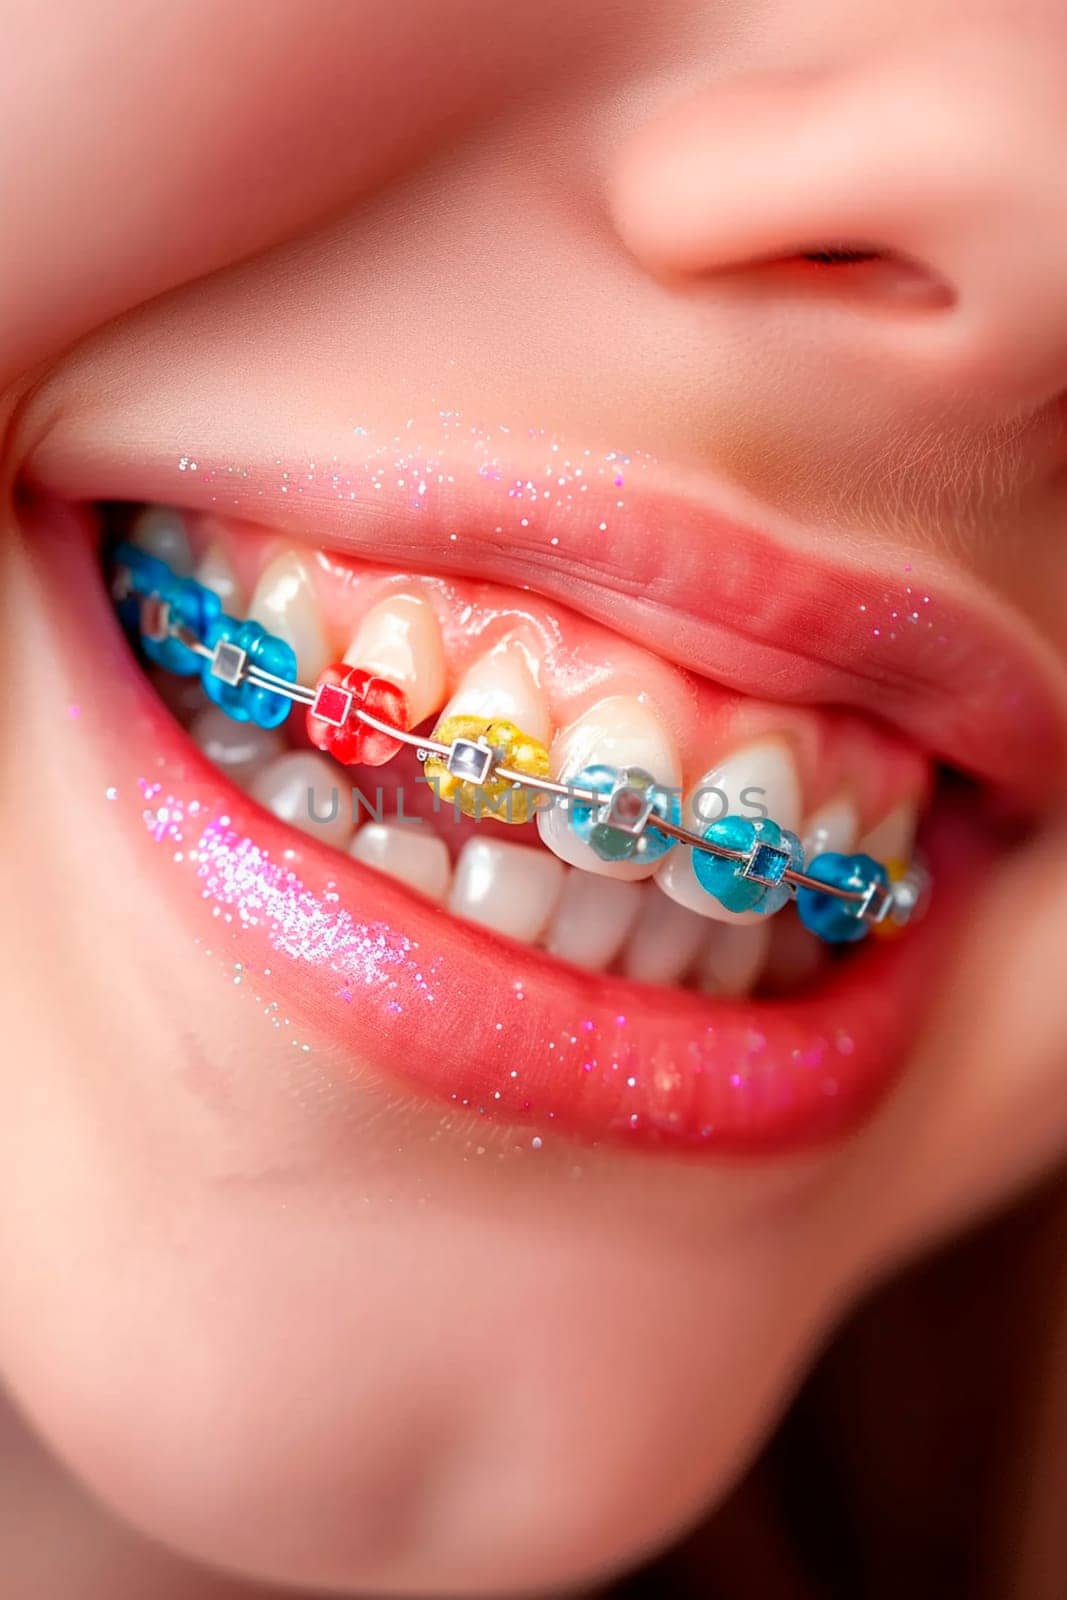 multi-colored braces smile child. Selective focus. by yanadjana